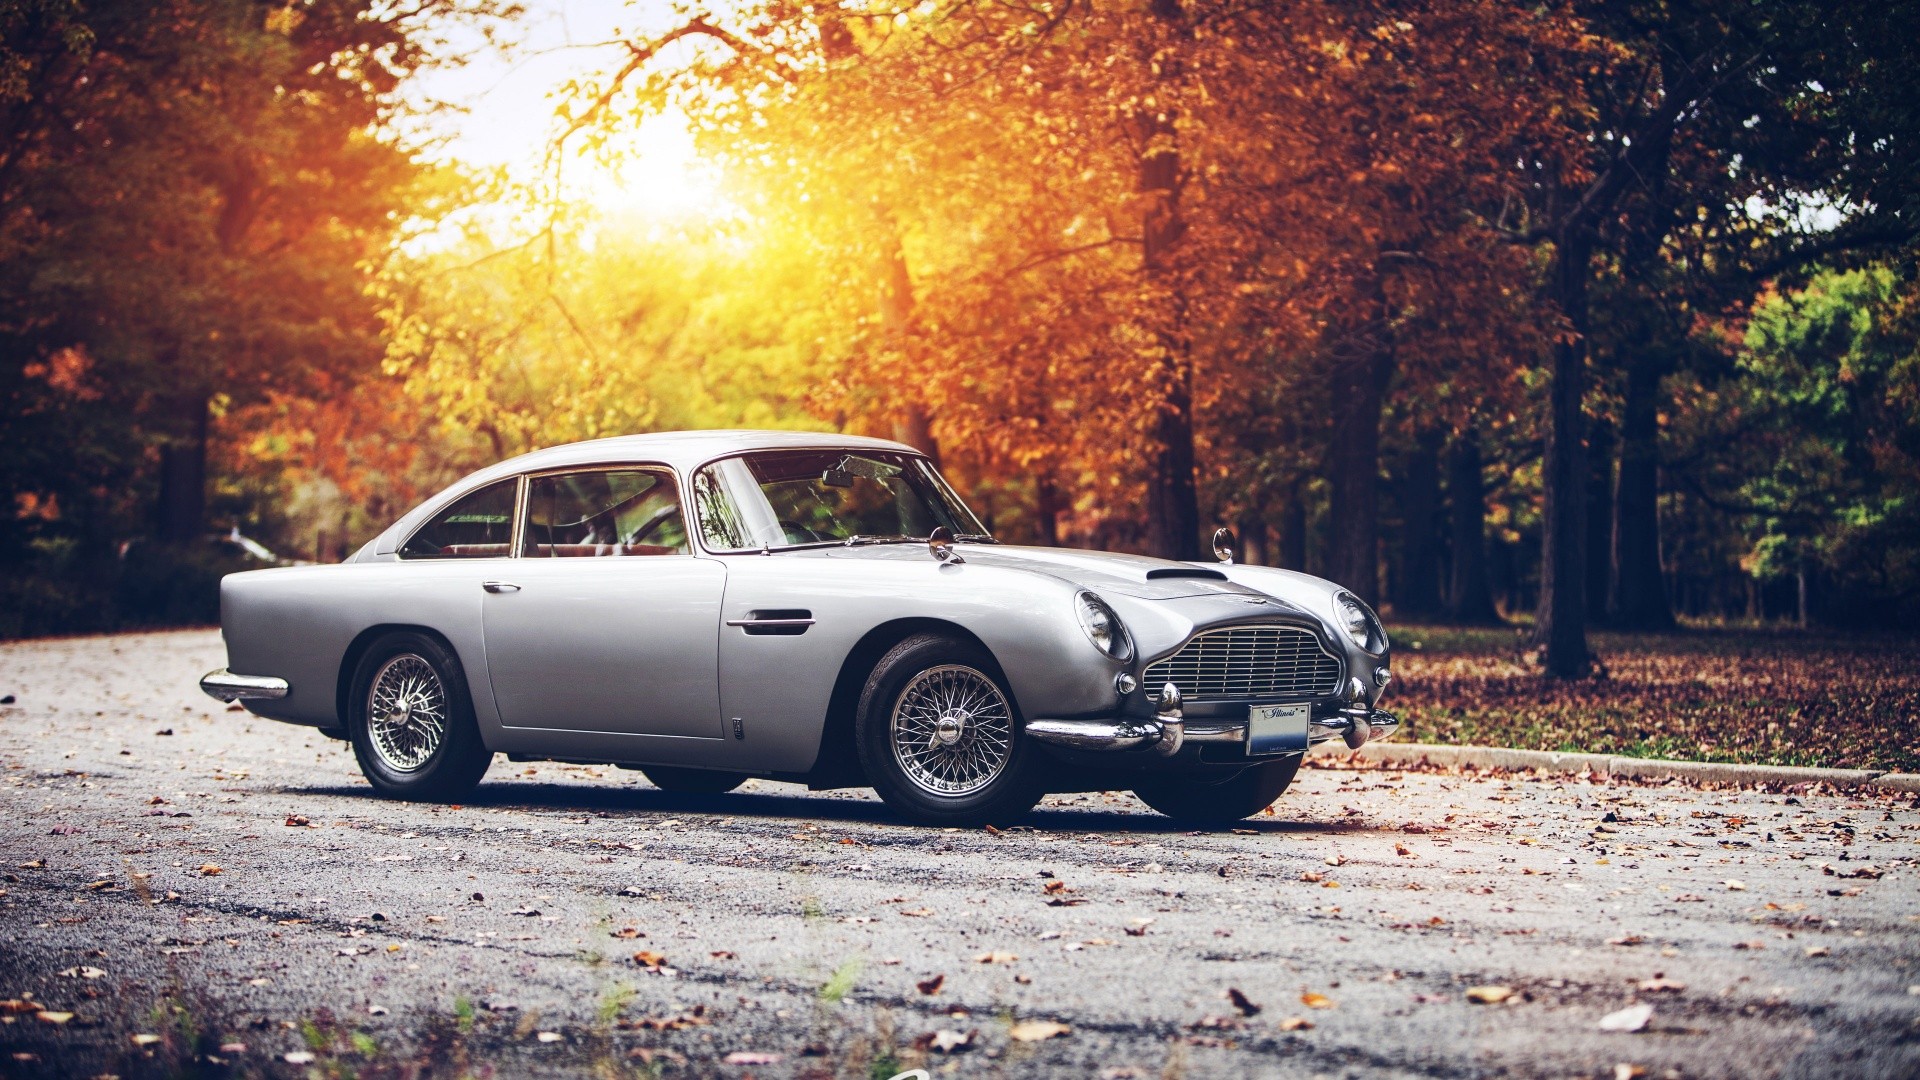 Aston Martin DB5, Car, James Bond, Bond Cars Wallpaper